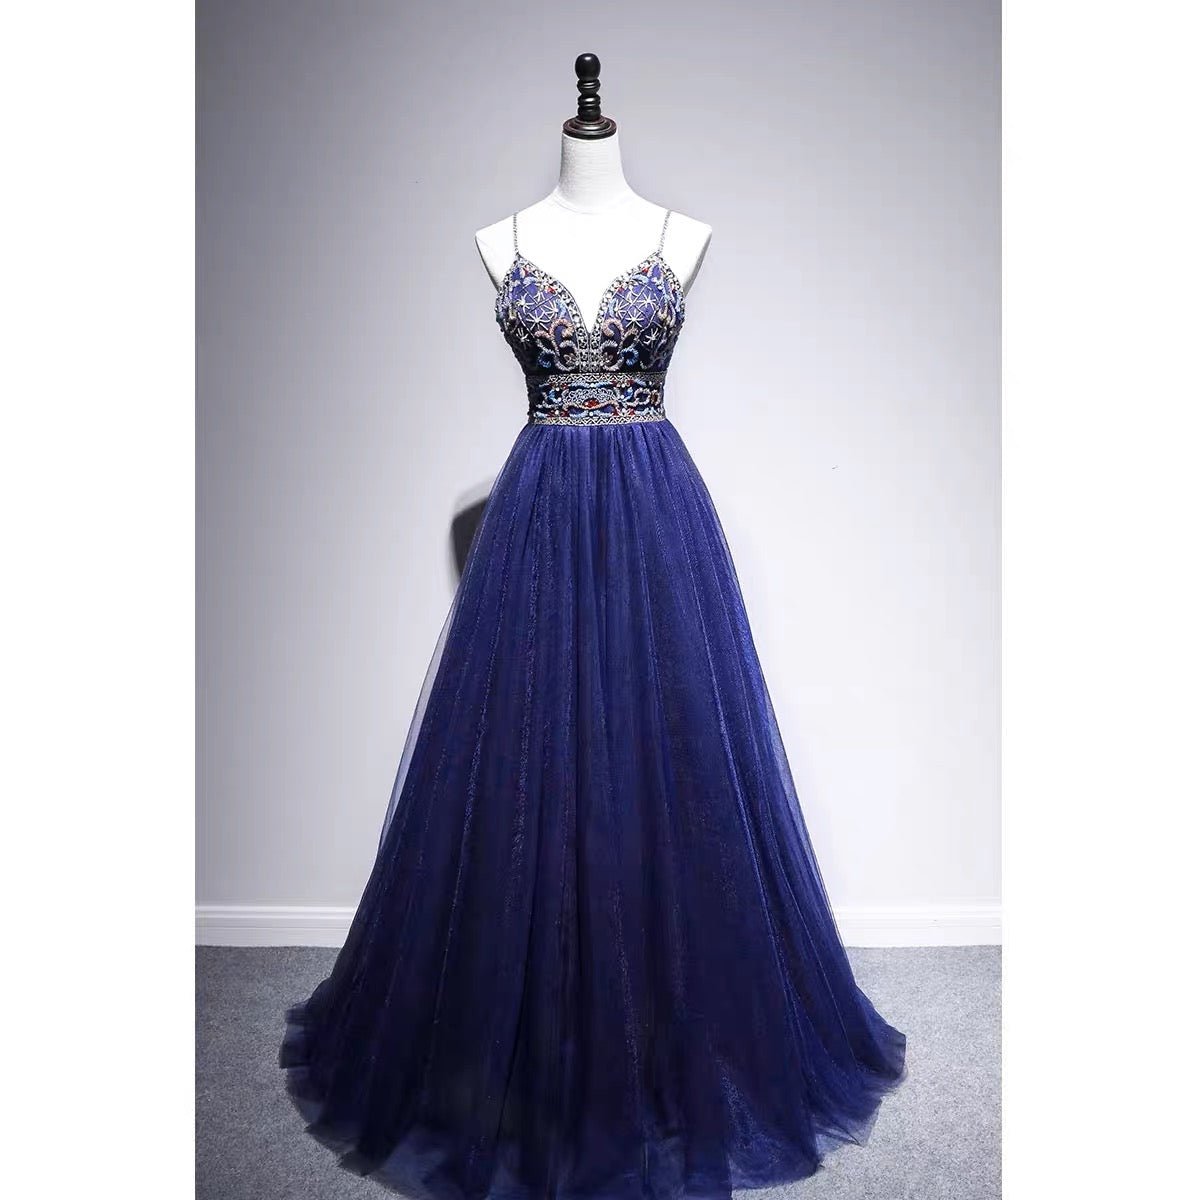 Sapphire Blue Spaghetti Straps Jeweled Evening Gown - Formal Dress Plus Size - WonderlandByLilian